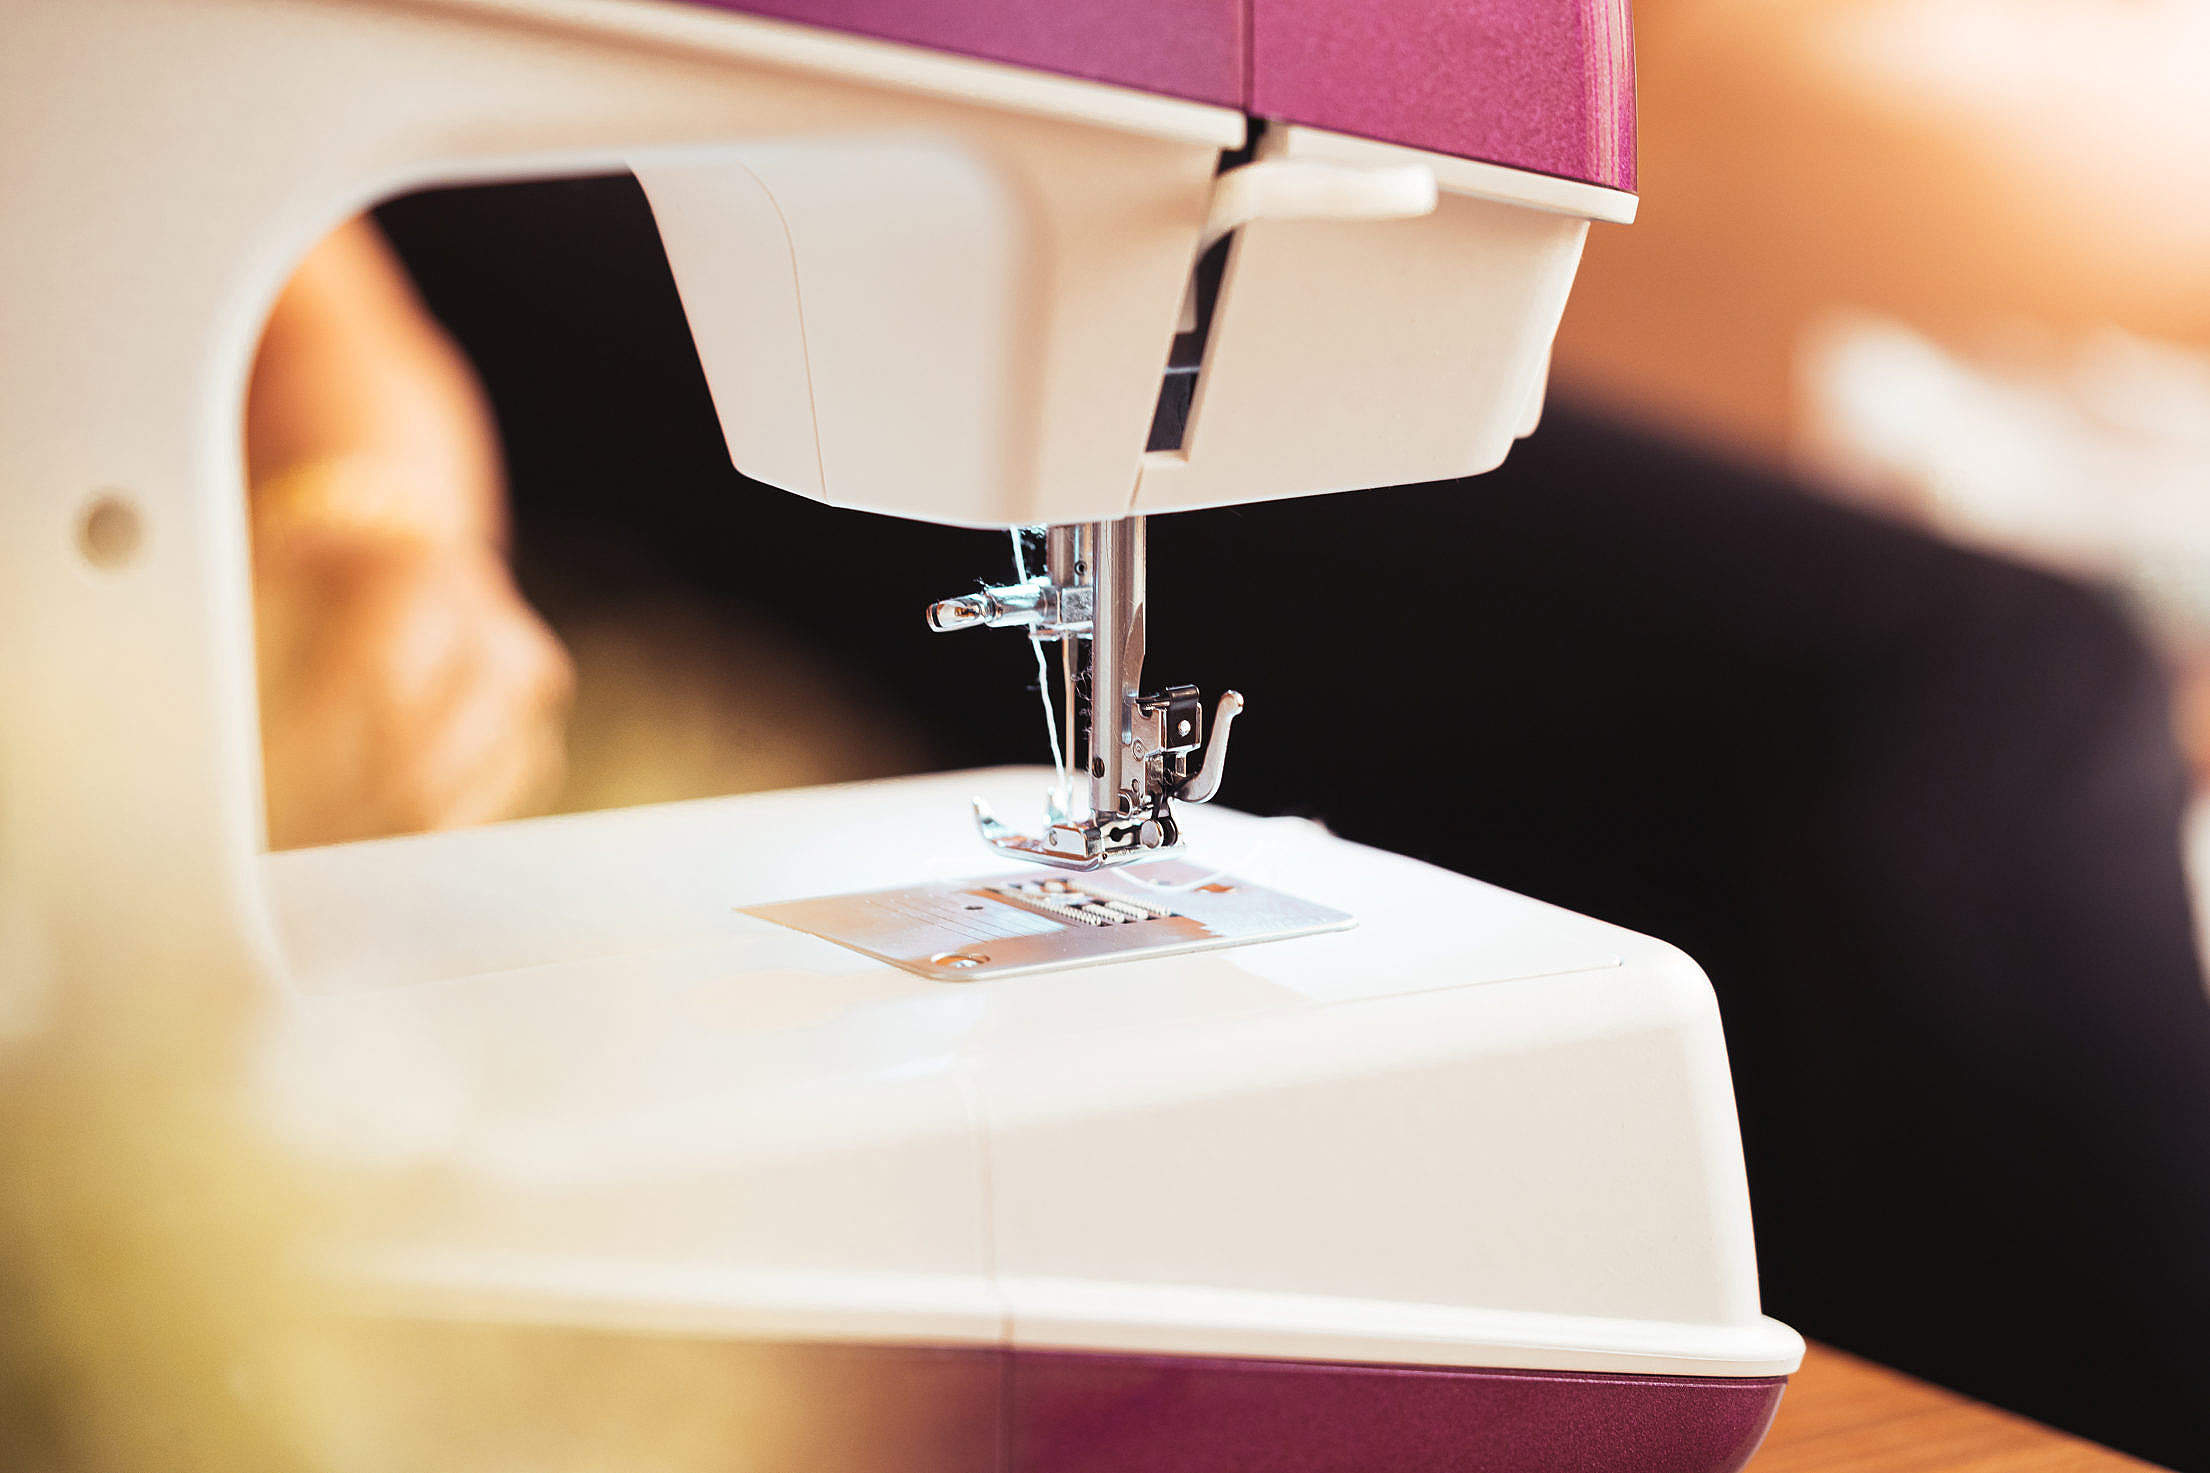 Home Sewing Machine Free Stock Photo